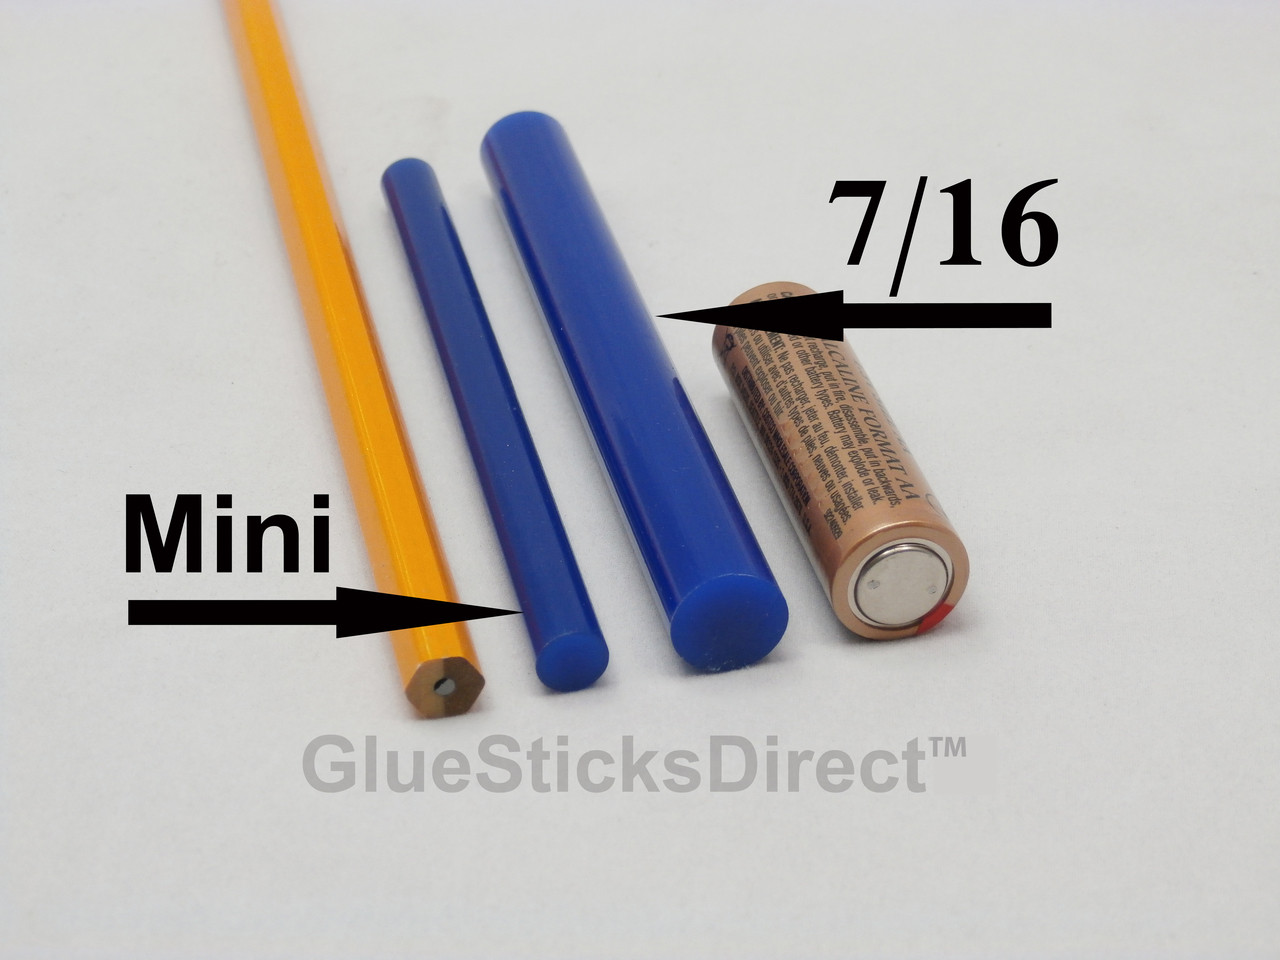 GlueSticksDirect Turquoise Colored Glue Sticks 7/16" X 4" 5 lbs